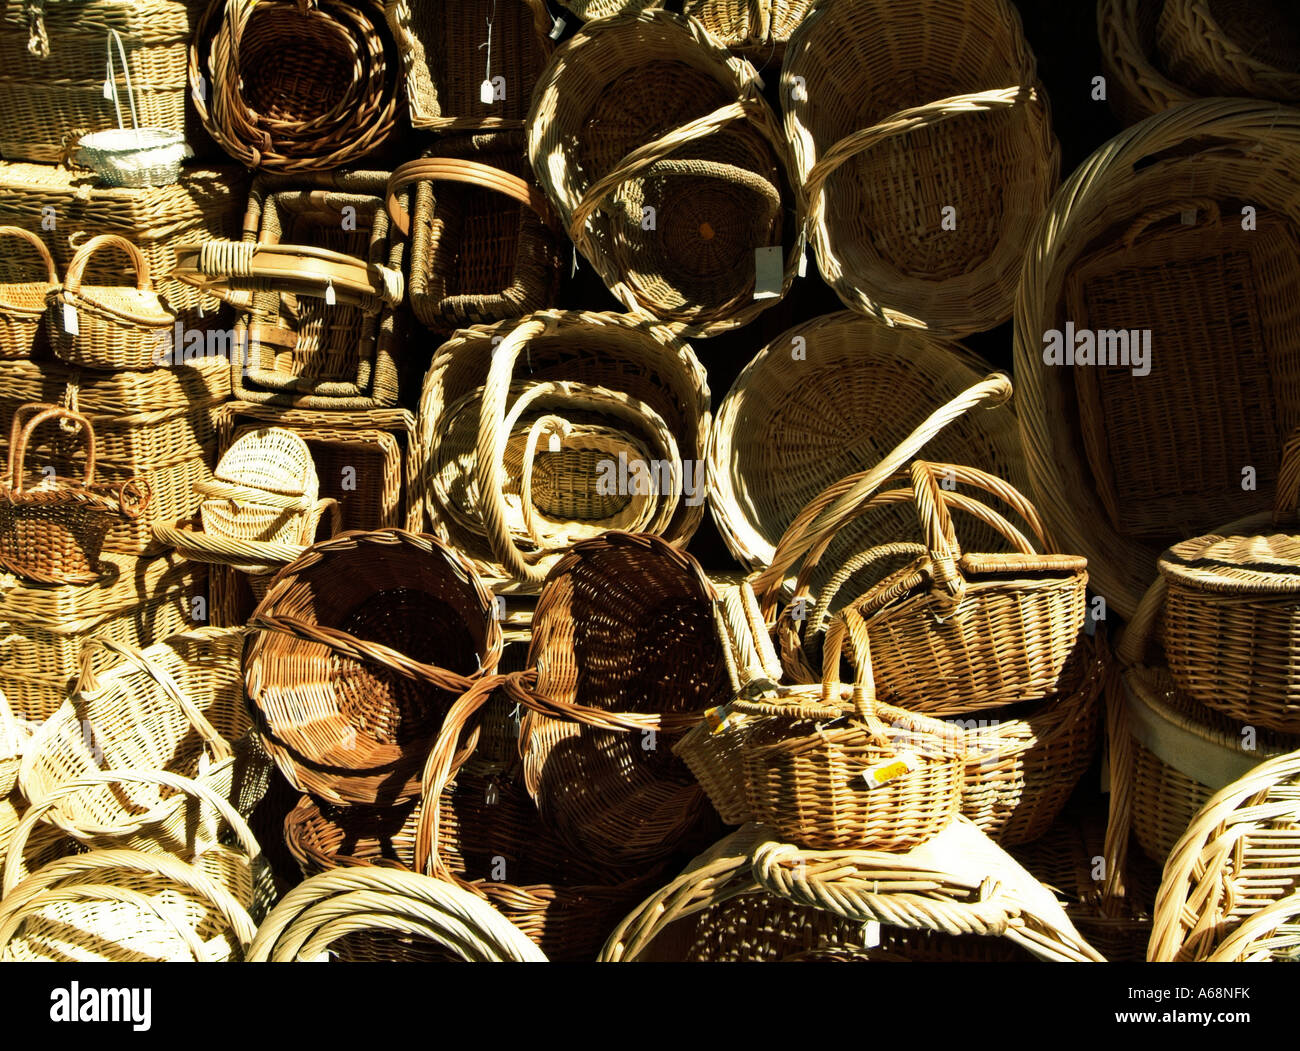 Basket-making handcrafts. Segovia. Spain Stock Photo